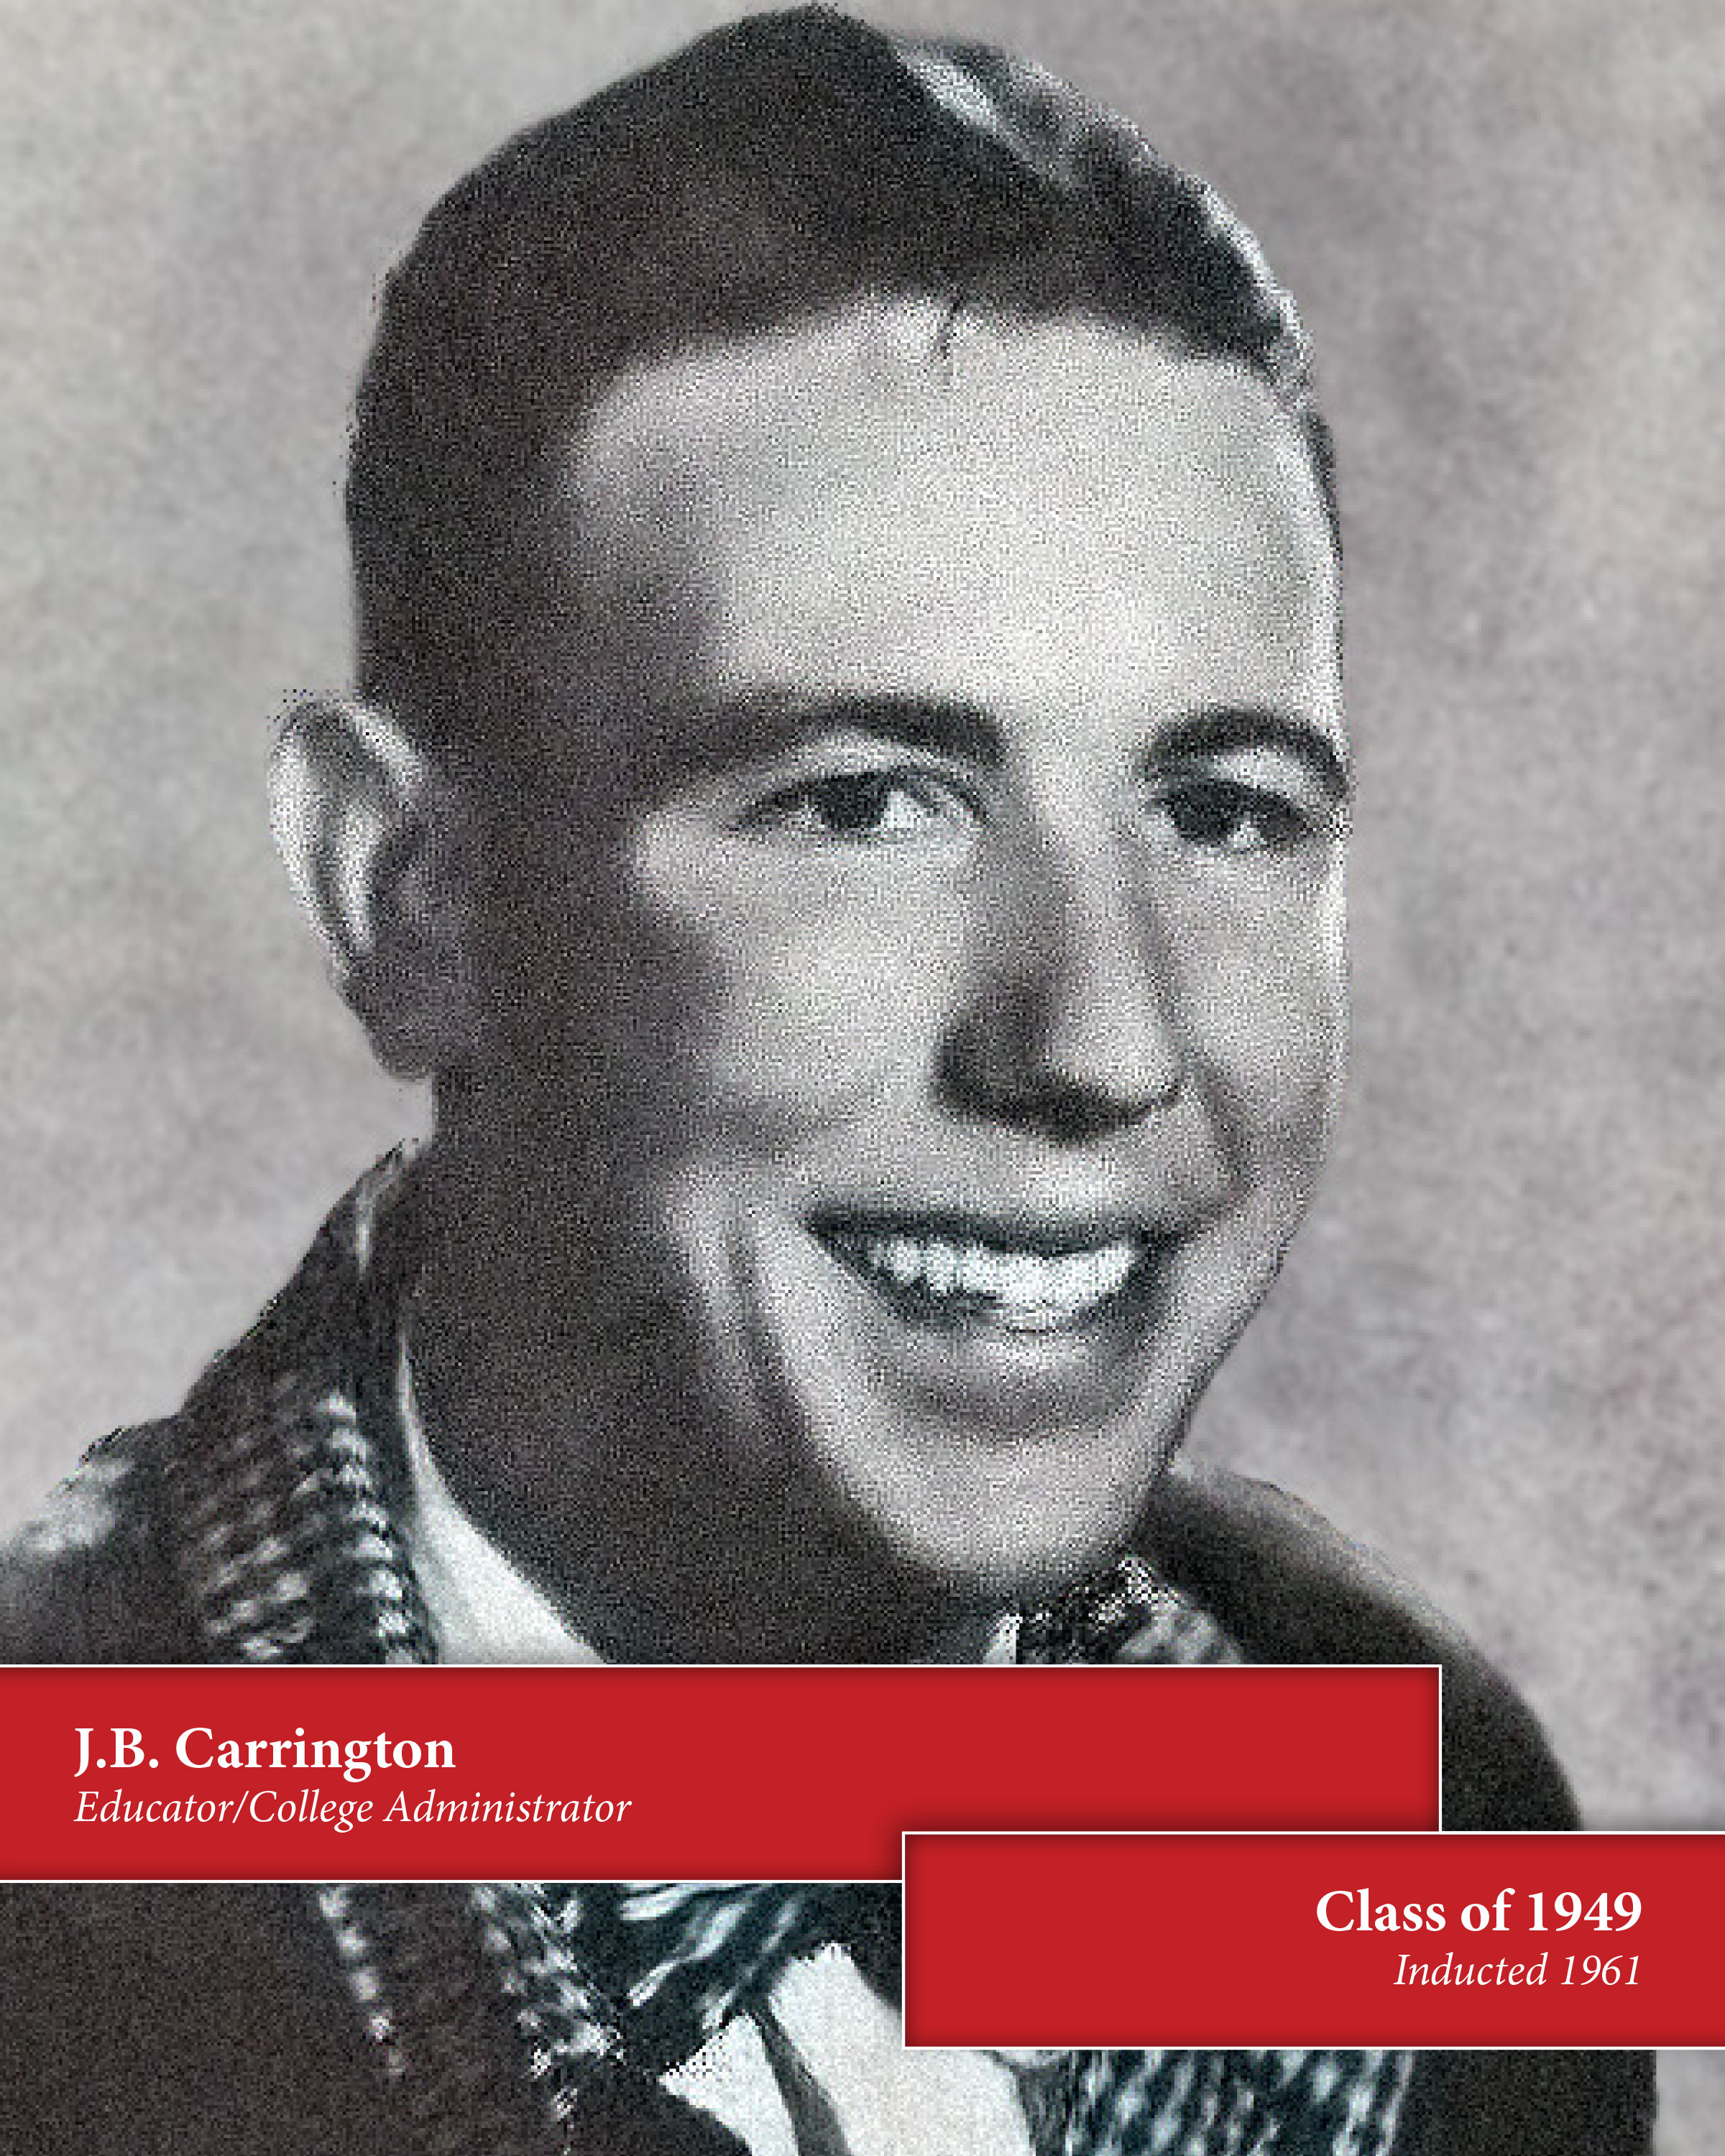 J.B. Carrington